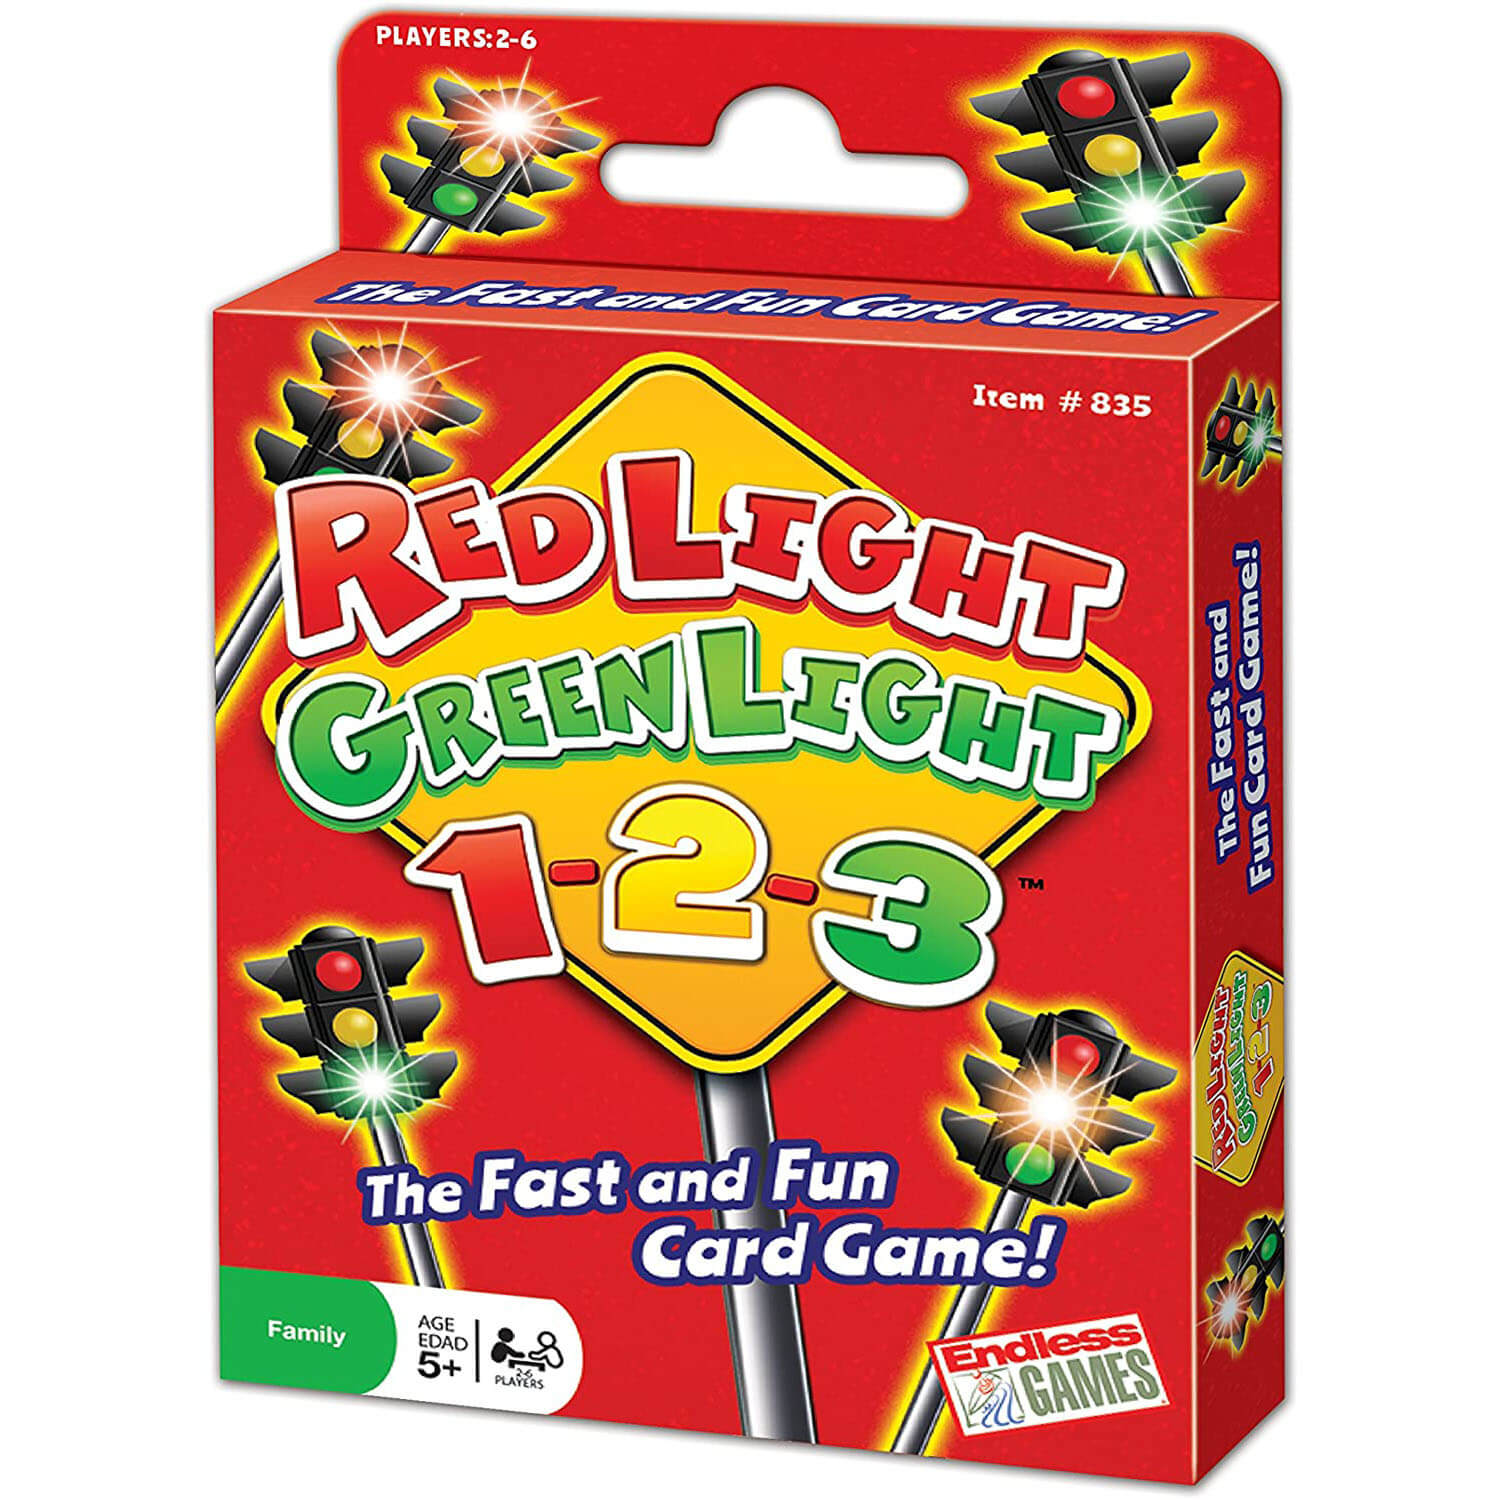 Endless Games Red Light, Green Light, 1-2-3 Game